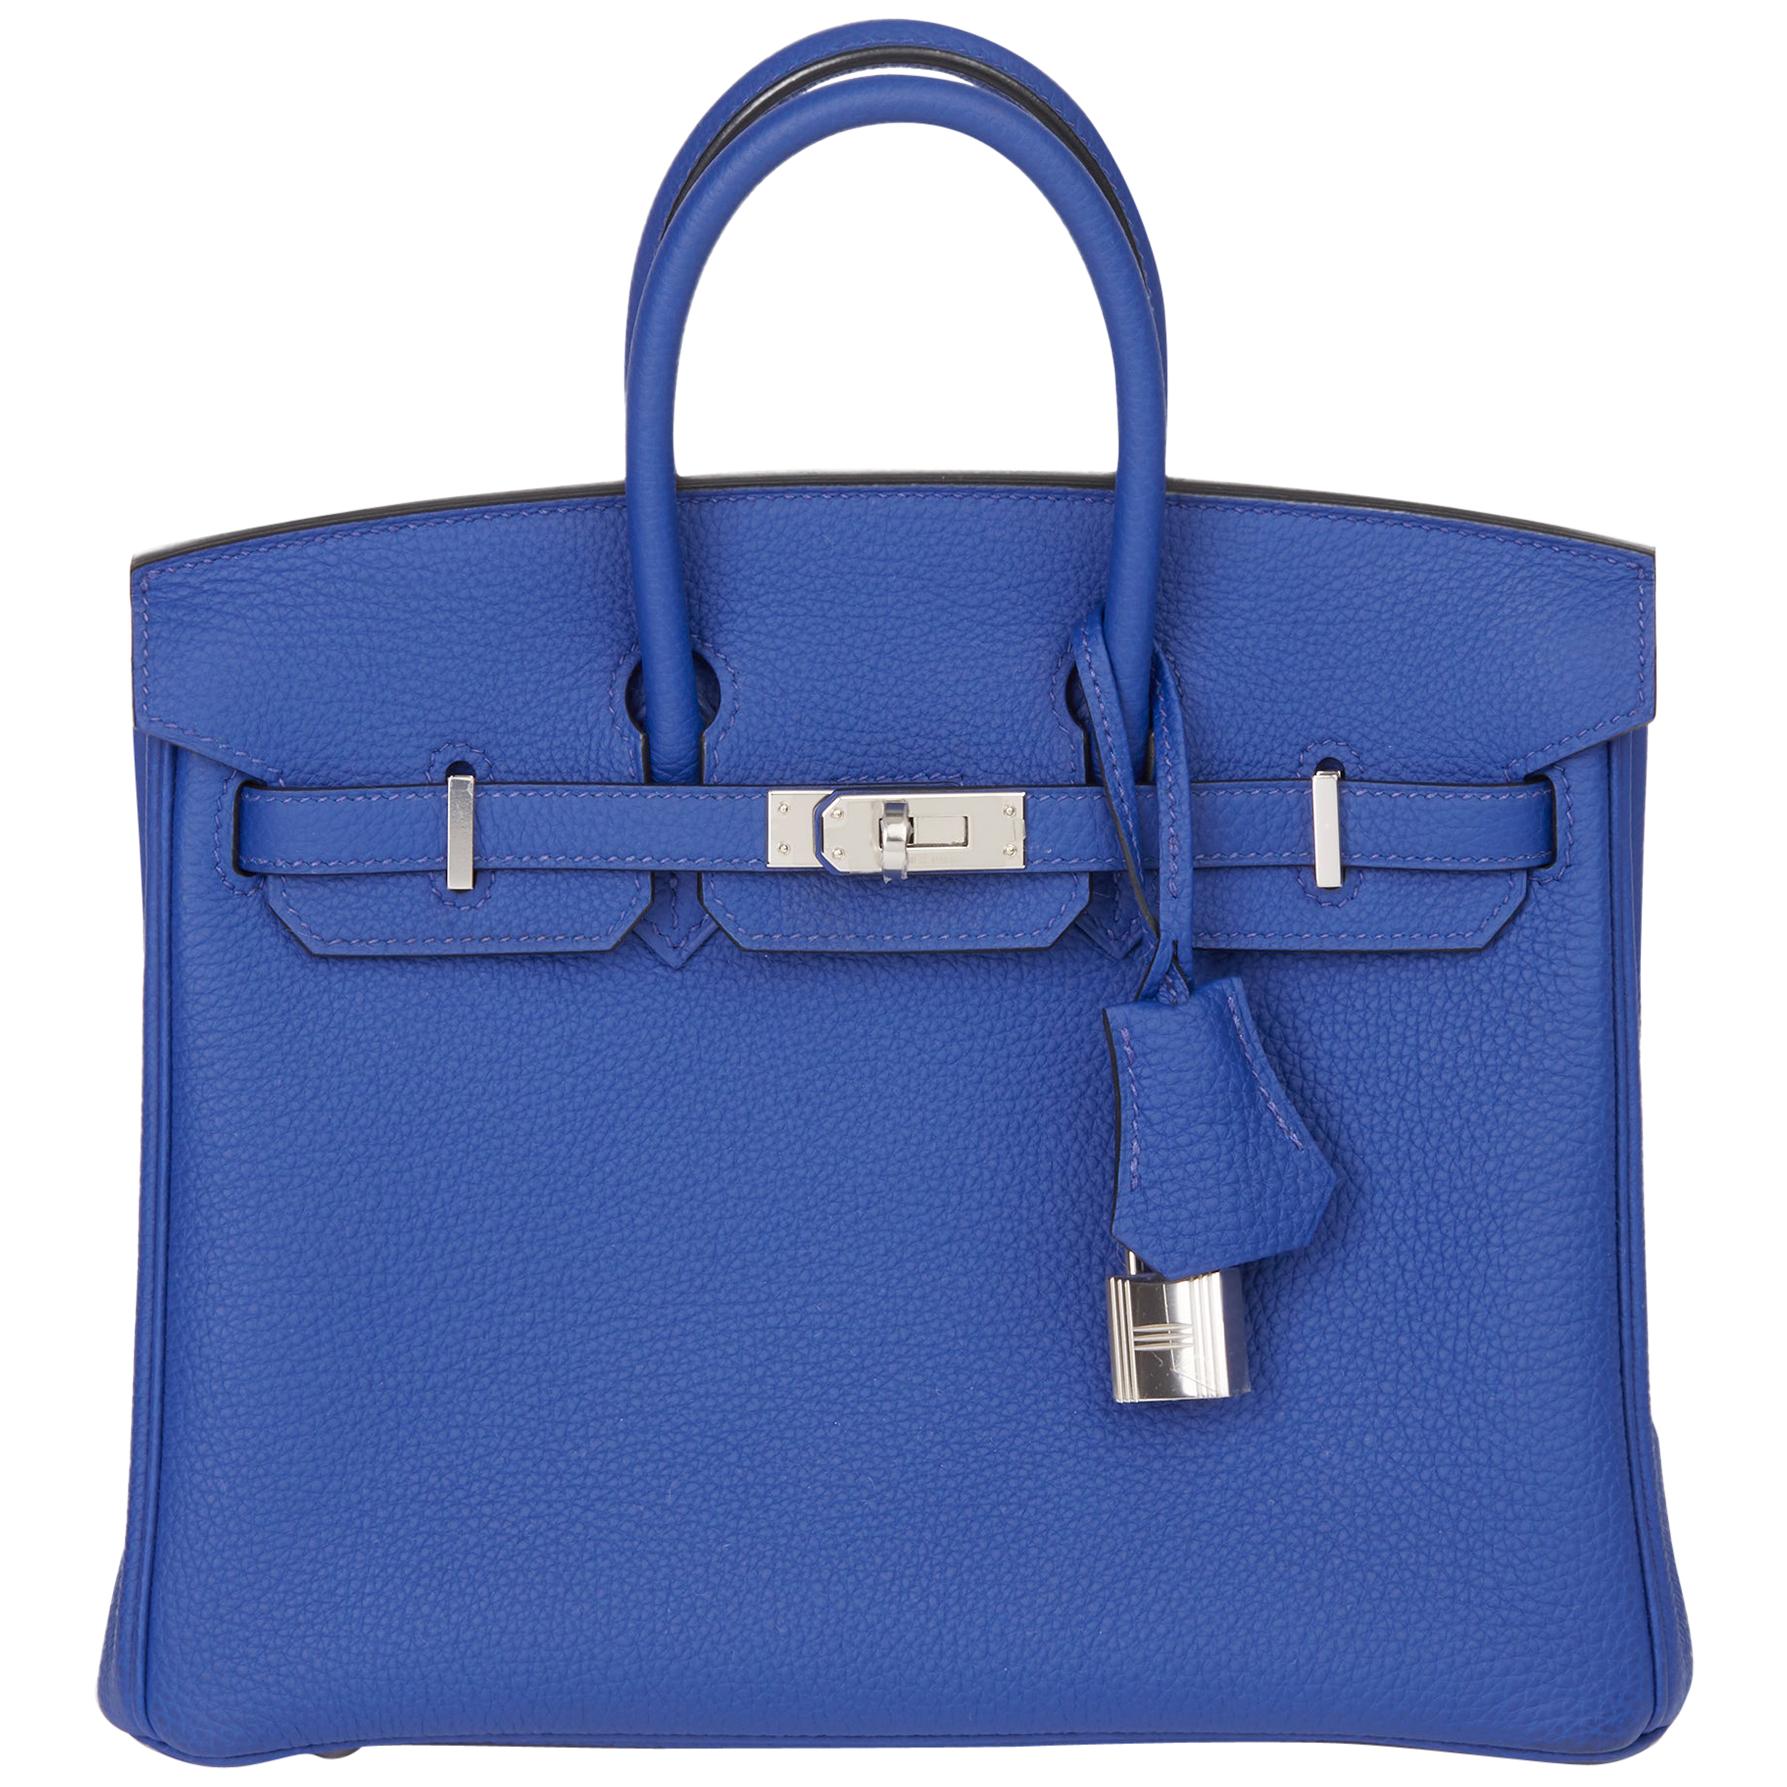 2016 Hermès Blue Electric Togo Leather Birkin 25cm